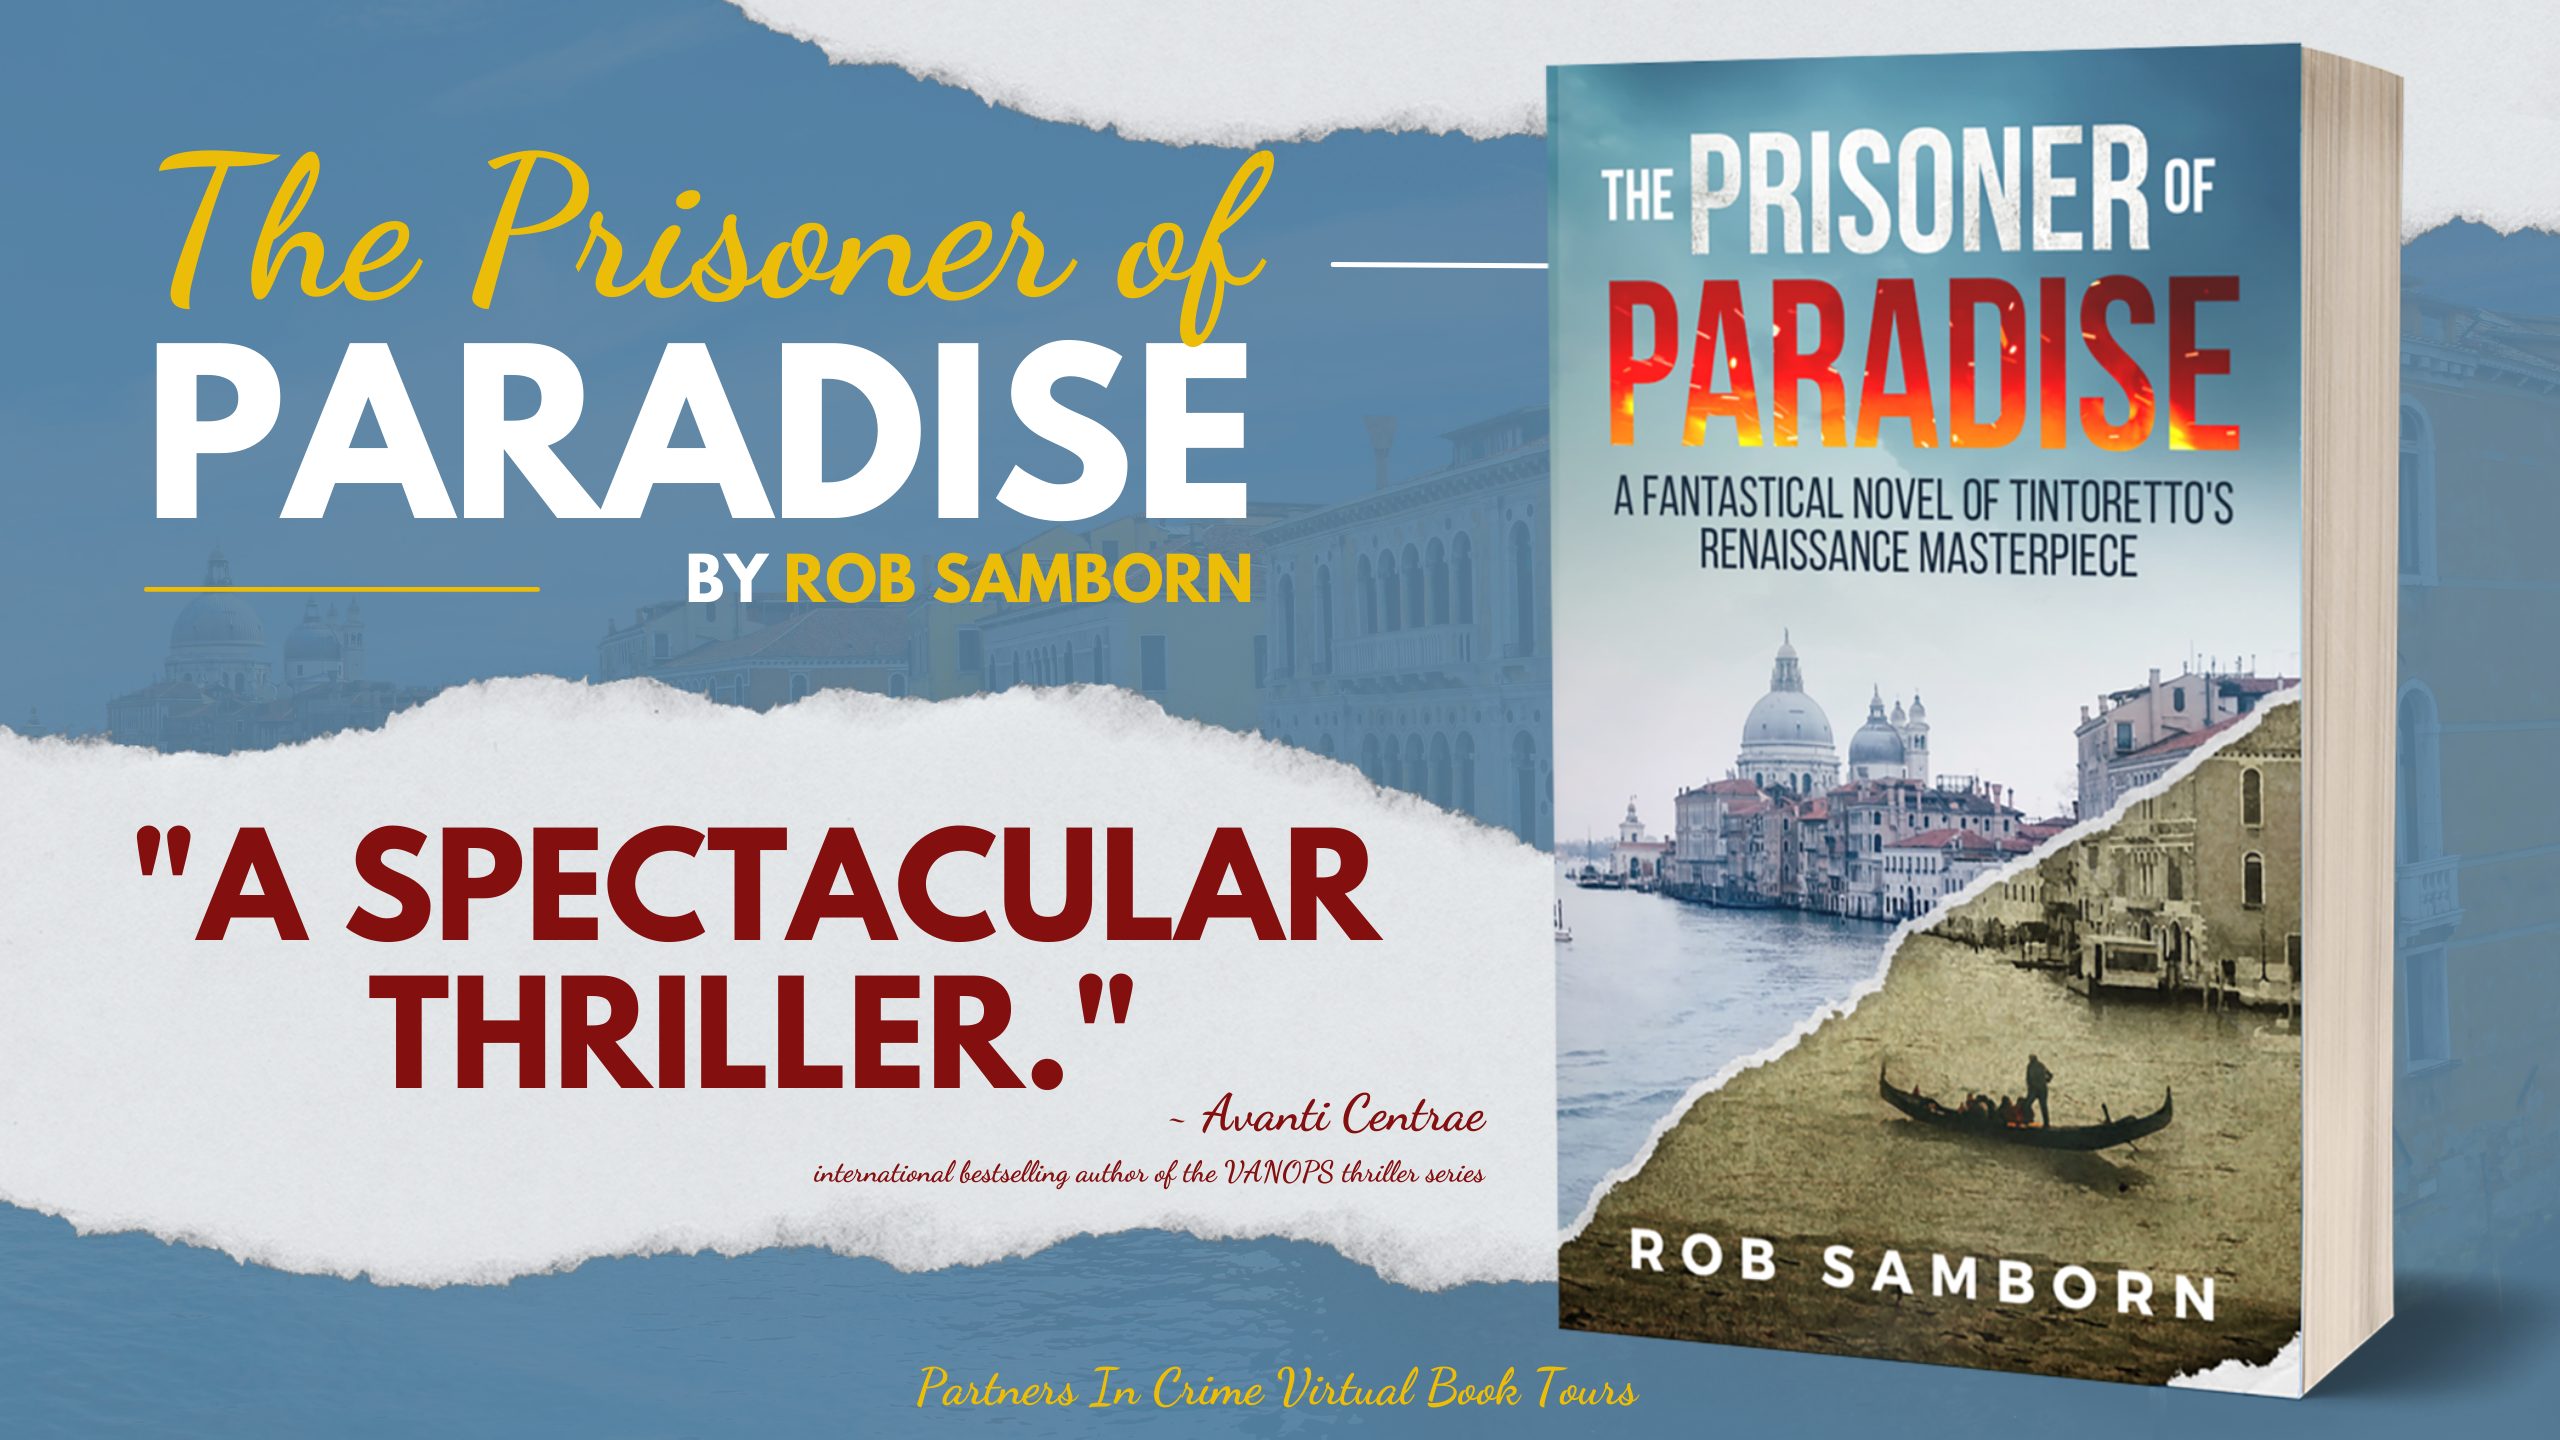 The Prisoner of Paradise by Rob Samborn Banner